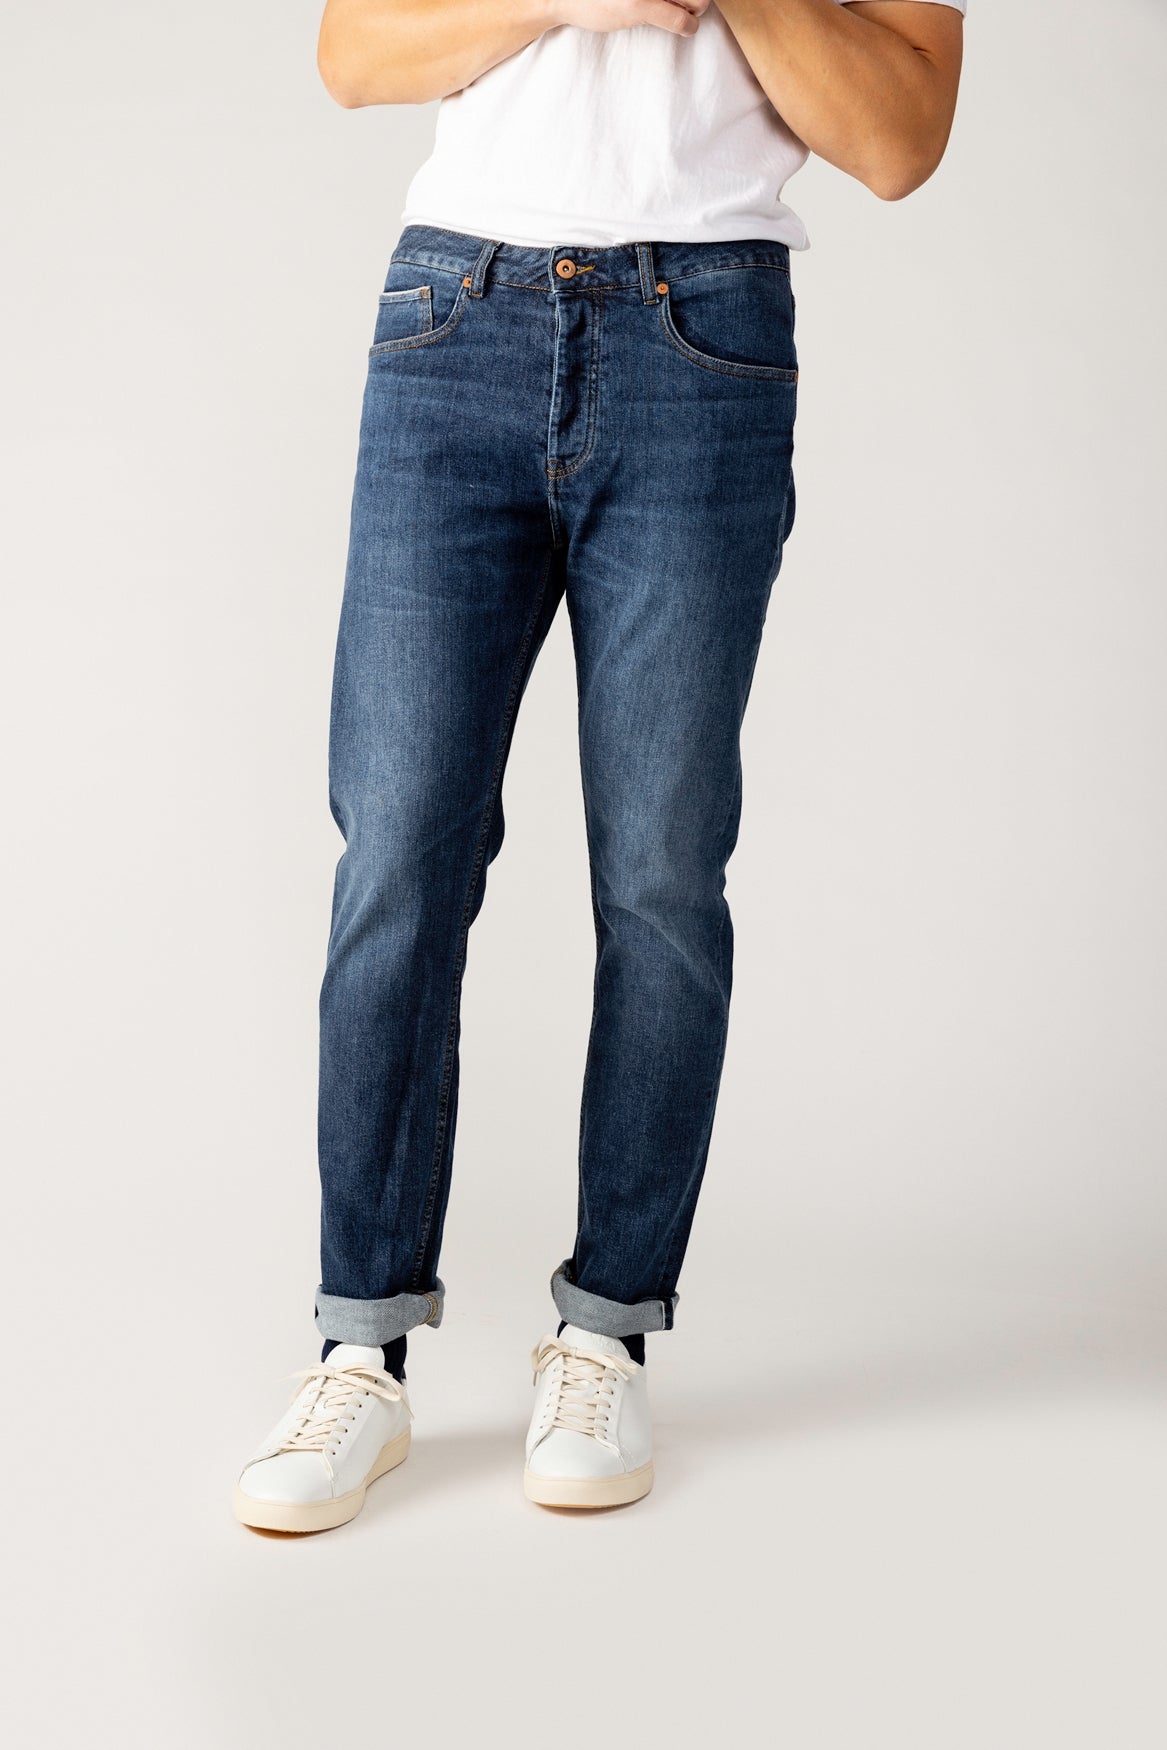 Men's Selvage Jeans & Selvage Denim | Lee® Jeans